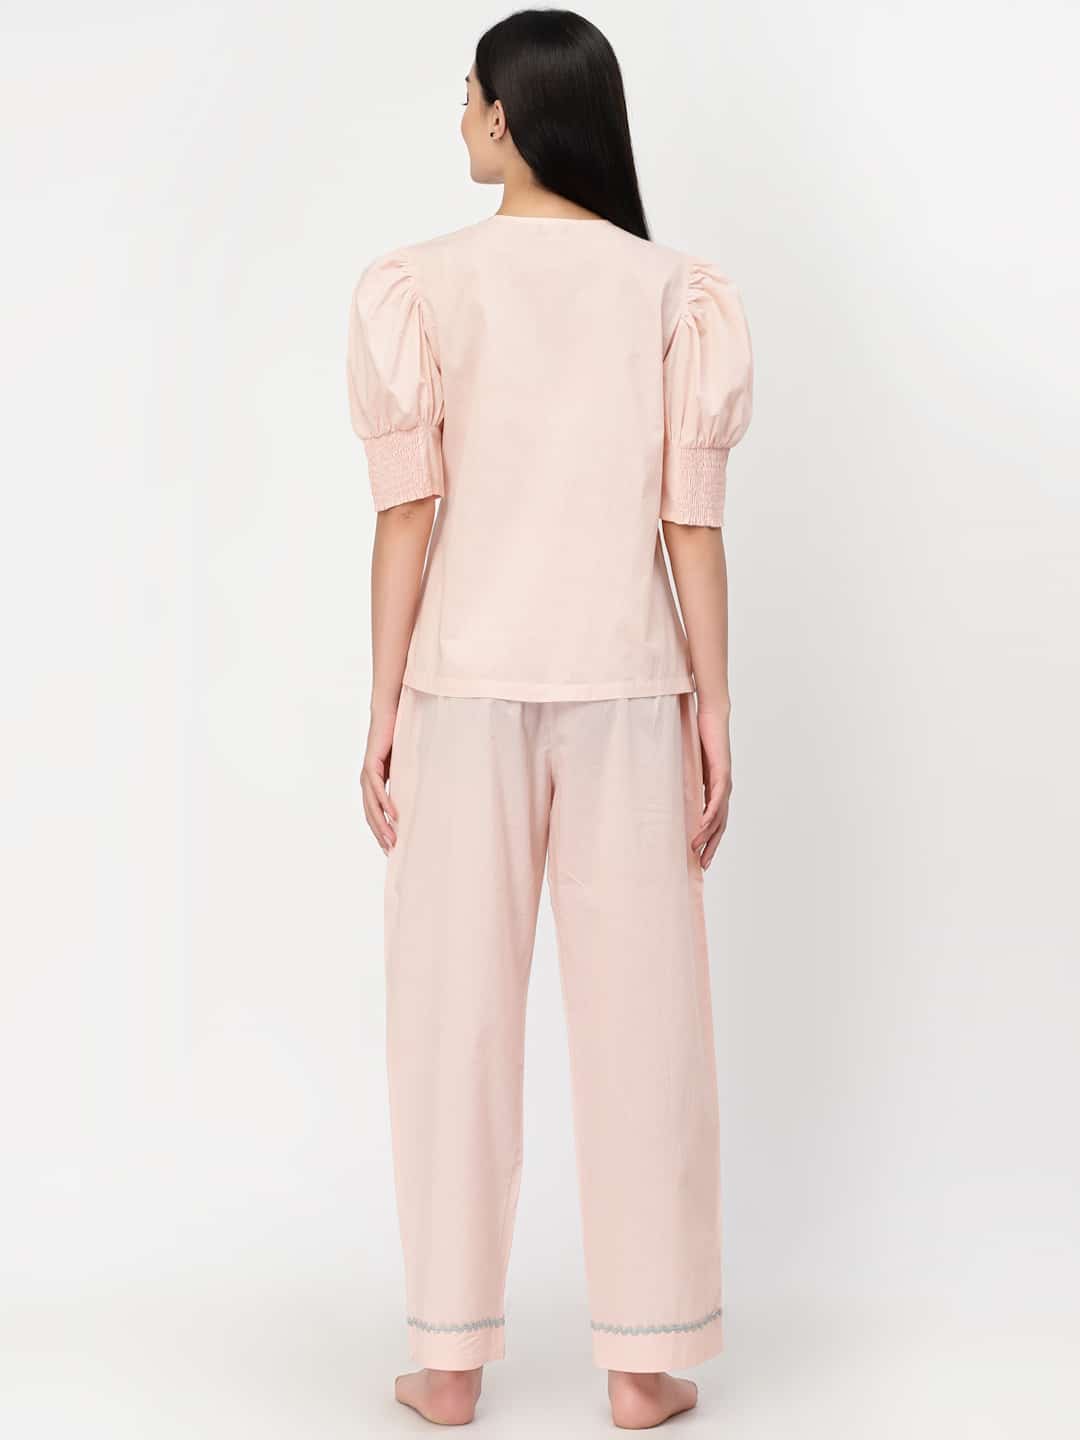 Peach With Brown Lace Cotton Pyjama Night Suit